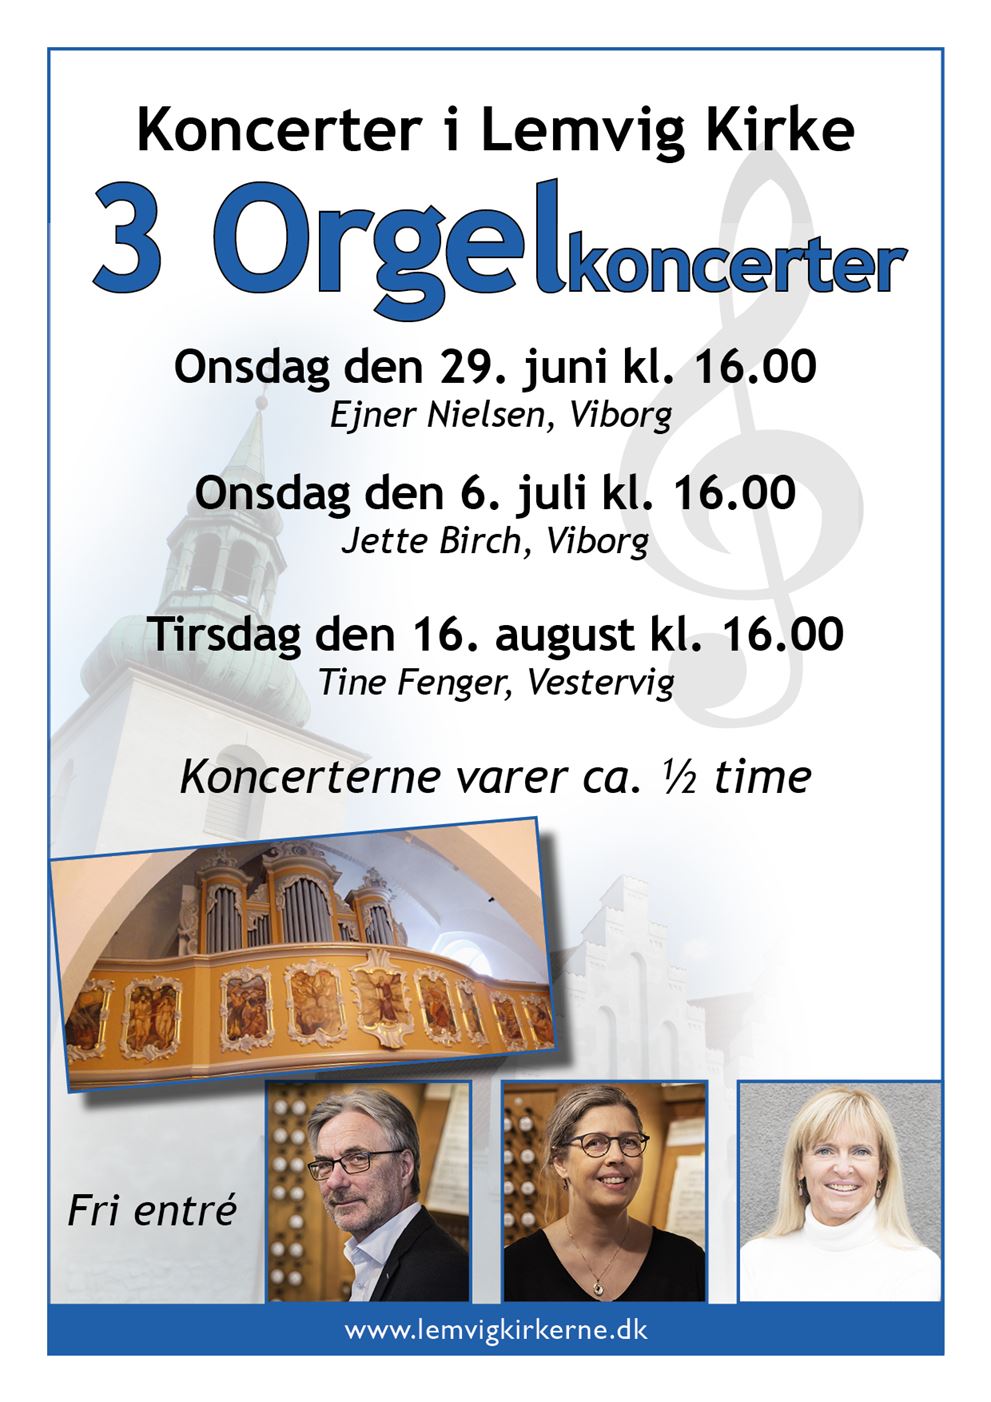 Orgelkoncerter Lemvig Kirke (1)